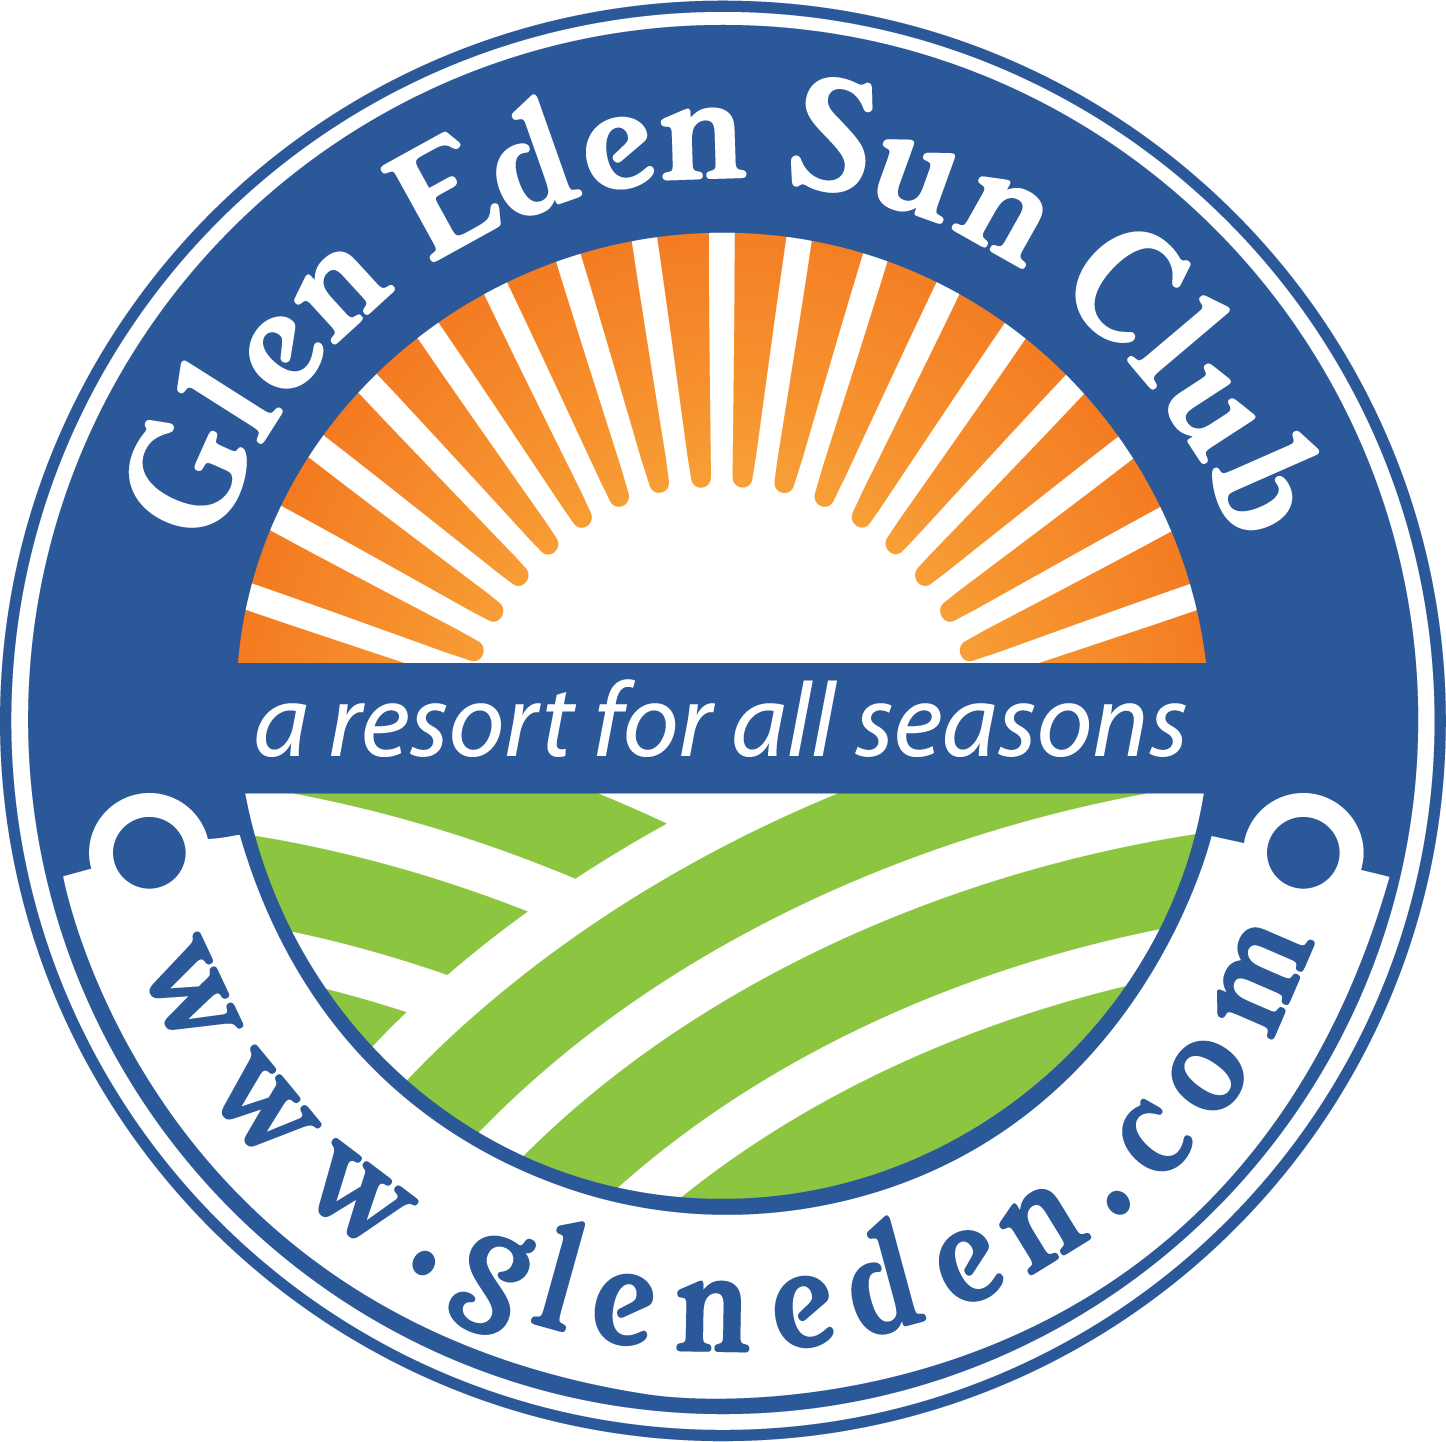 About Us — Glen Eden Sun Club picture